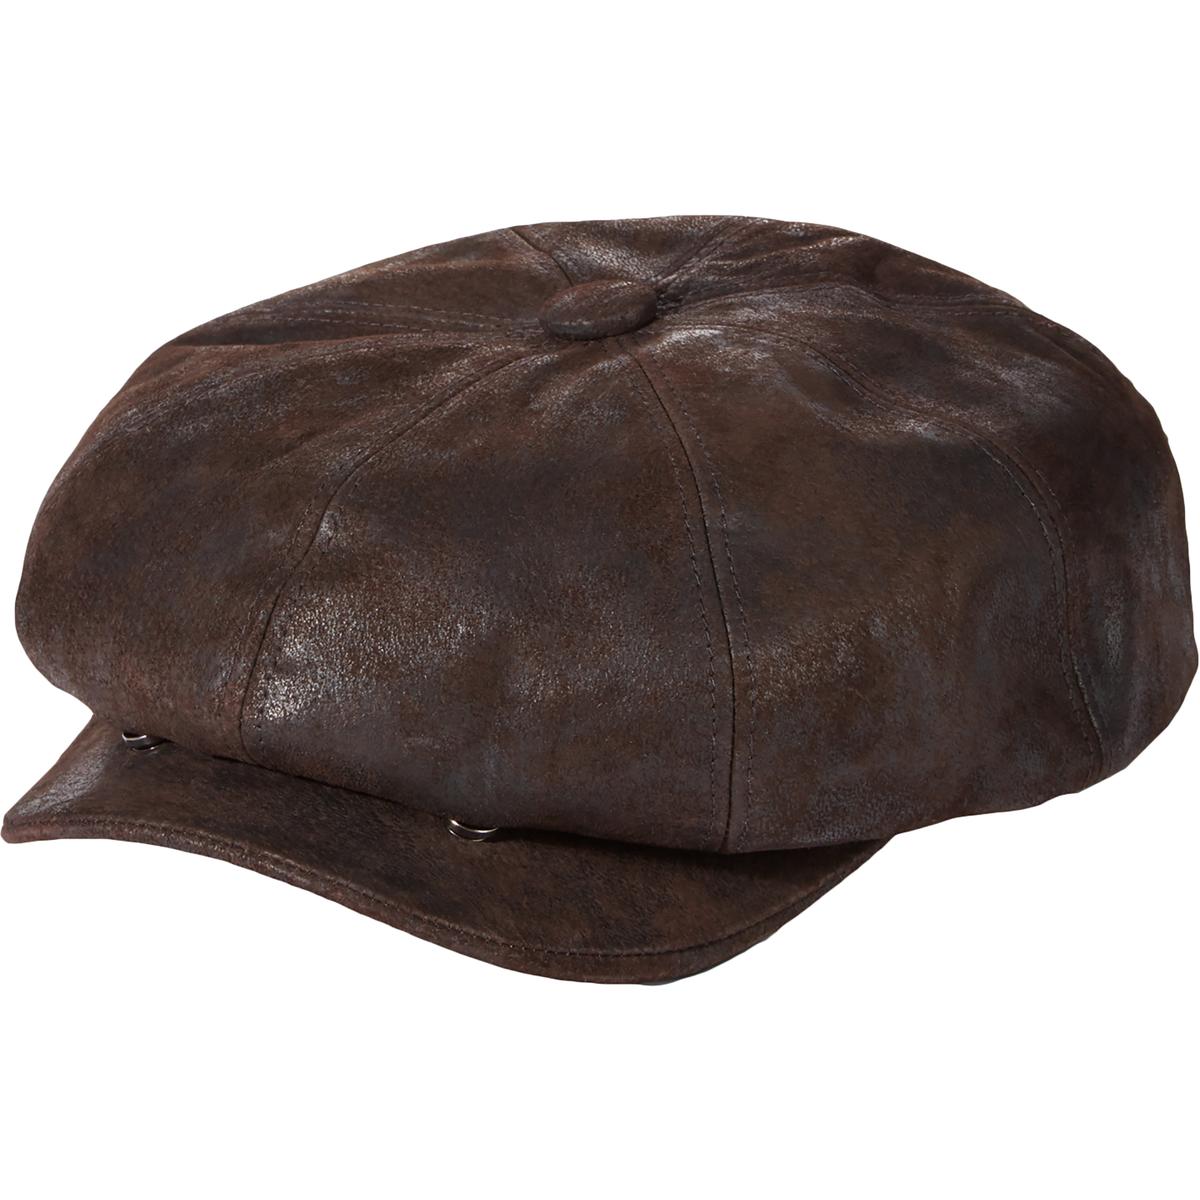 Stetson Mens Brown Leather Weathered Hat Newsboy Cap L BHFO 2604 | eBay